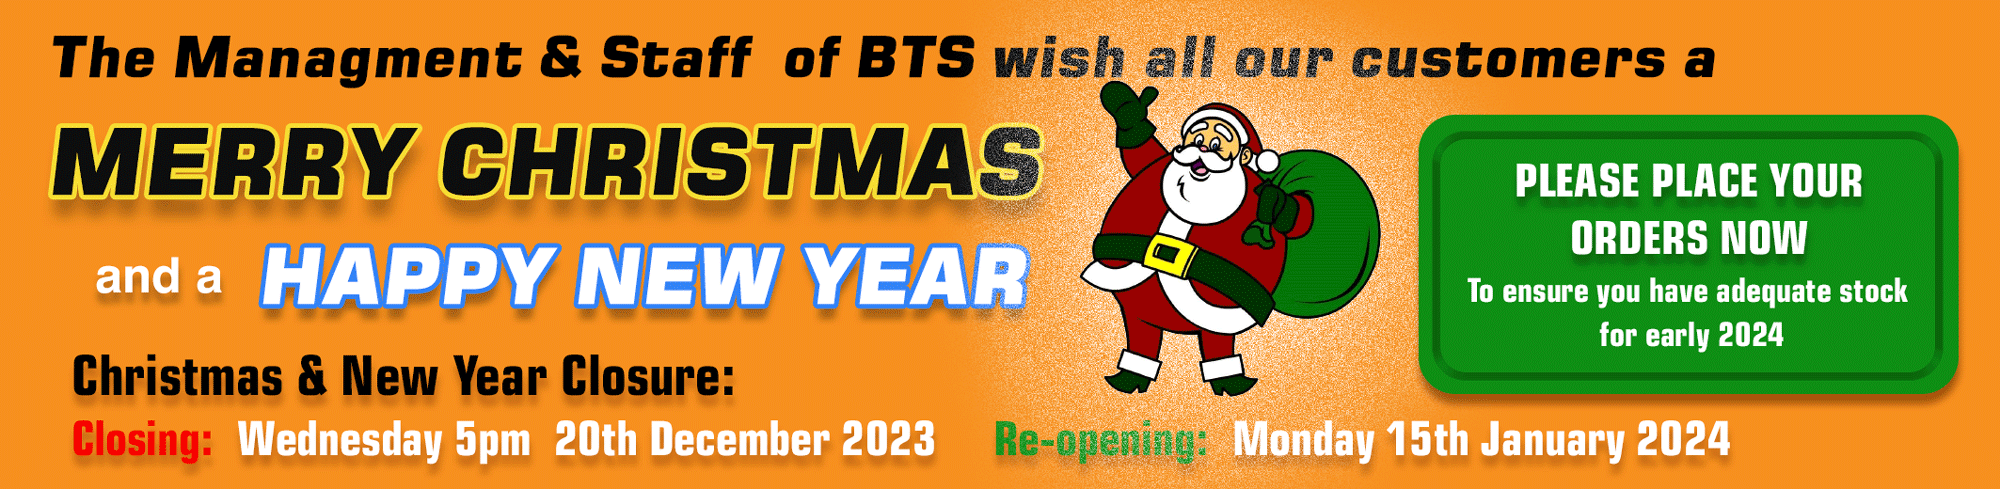 BTS Christmas closure dates